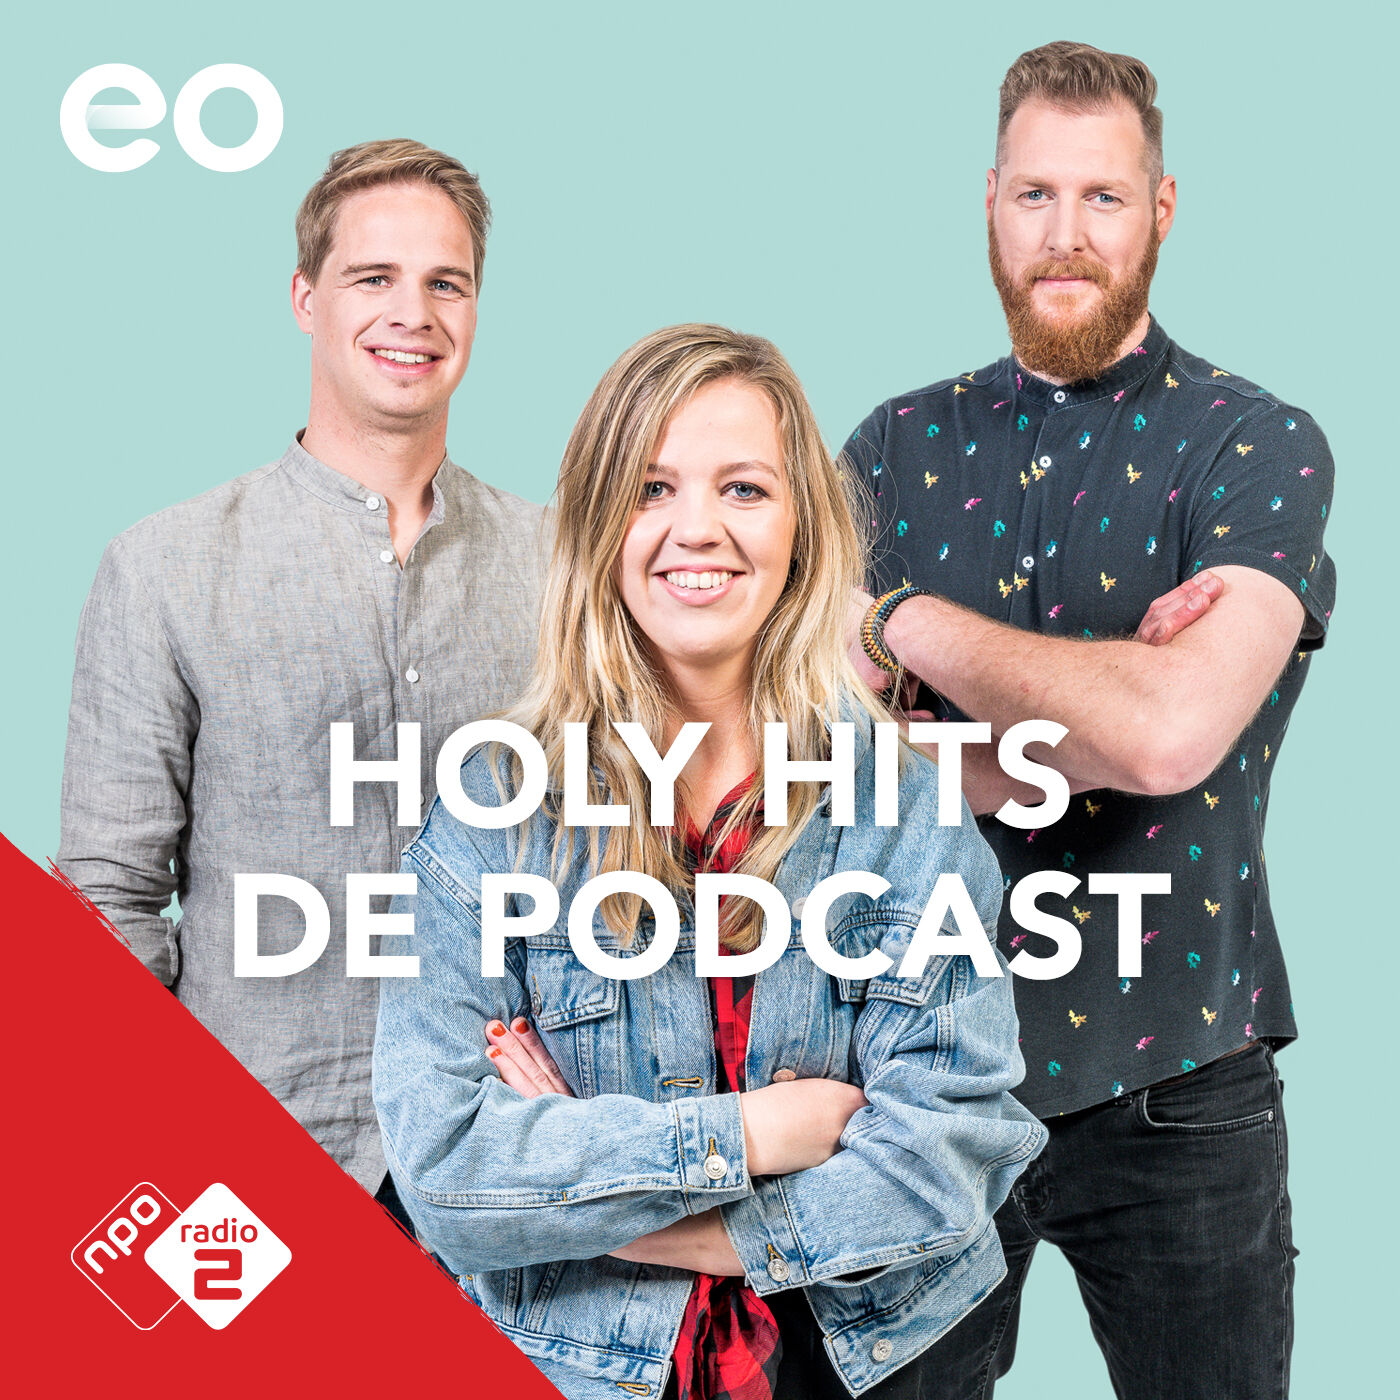 (Holy Hits de podcast) Live vanaf Graceland Festival: nieuwe tracks, quiz, live-muziek en een krekel